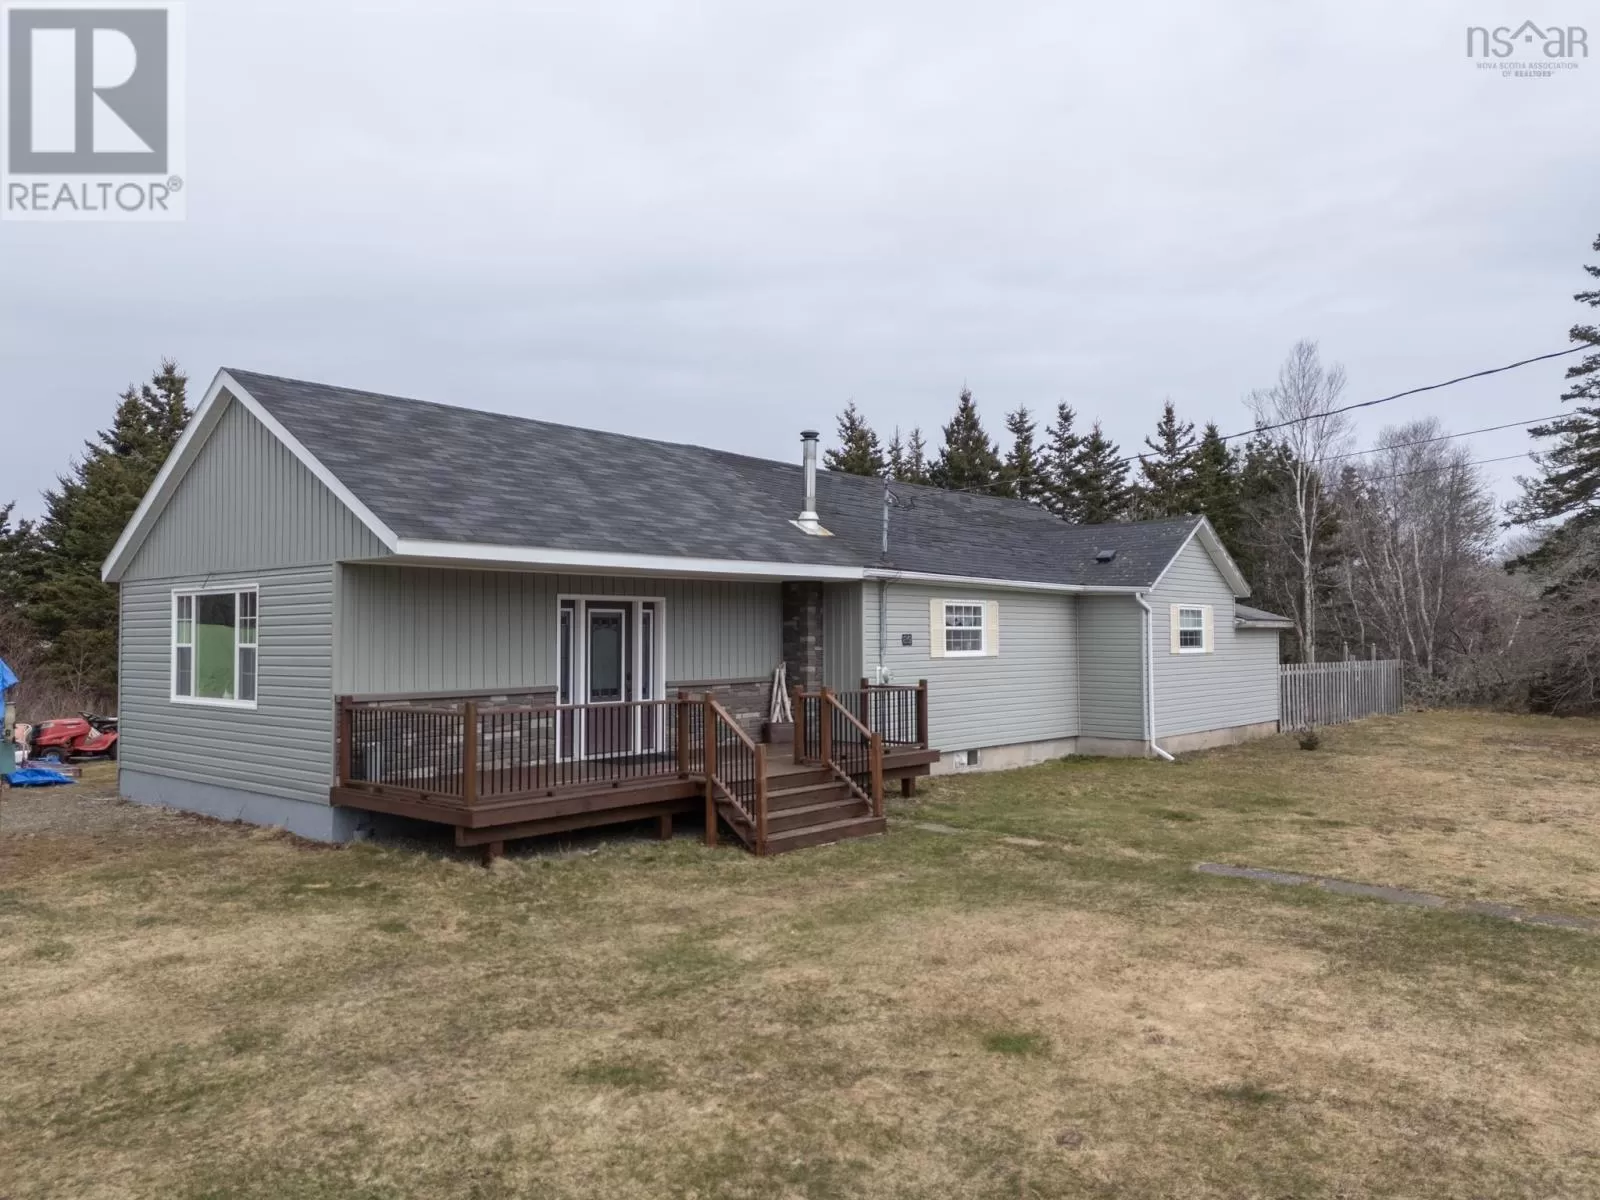 House for rent: 89 Newell Road, Plymouth, Nova Scotia B0W 1B0